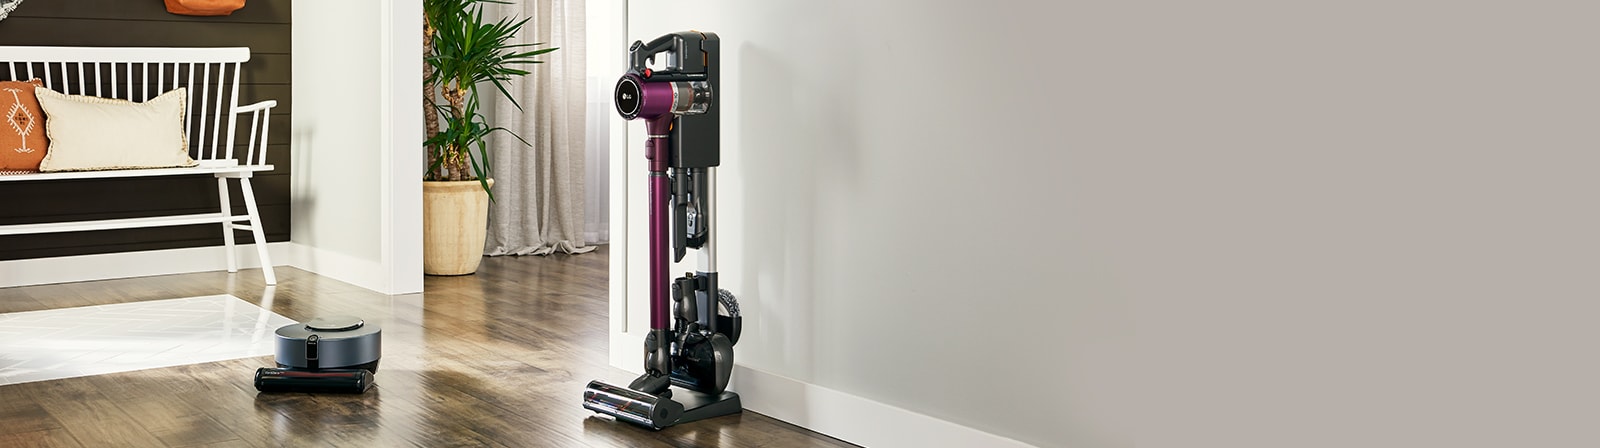 Vacuum Cleaners: Cordless, Stick & Robot Vacuums | LG USA